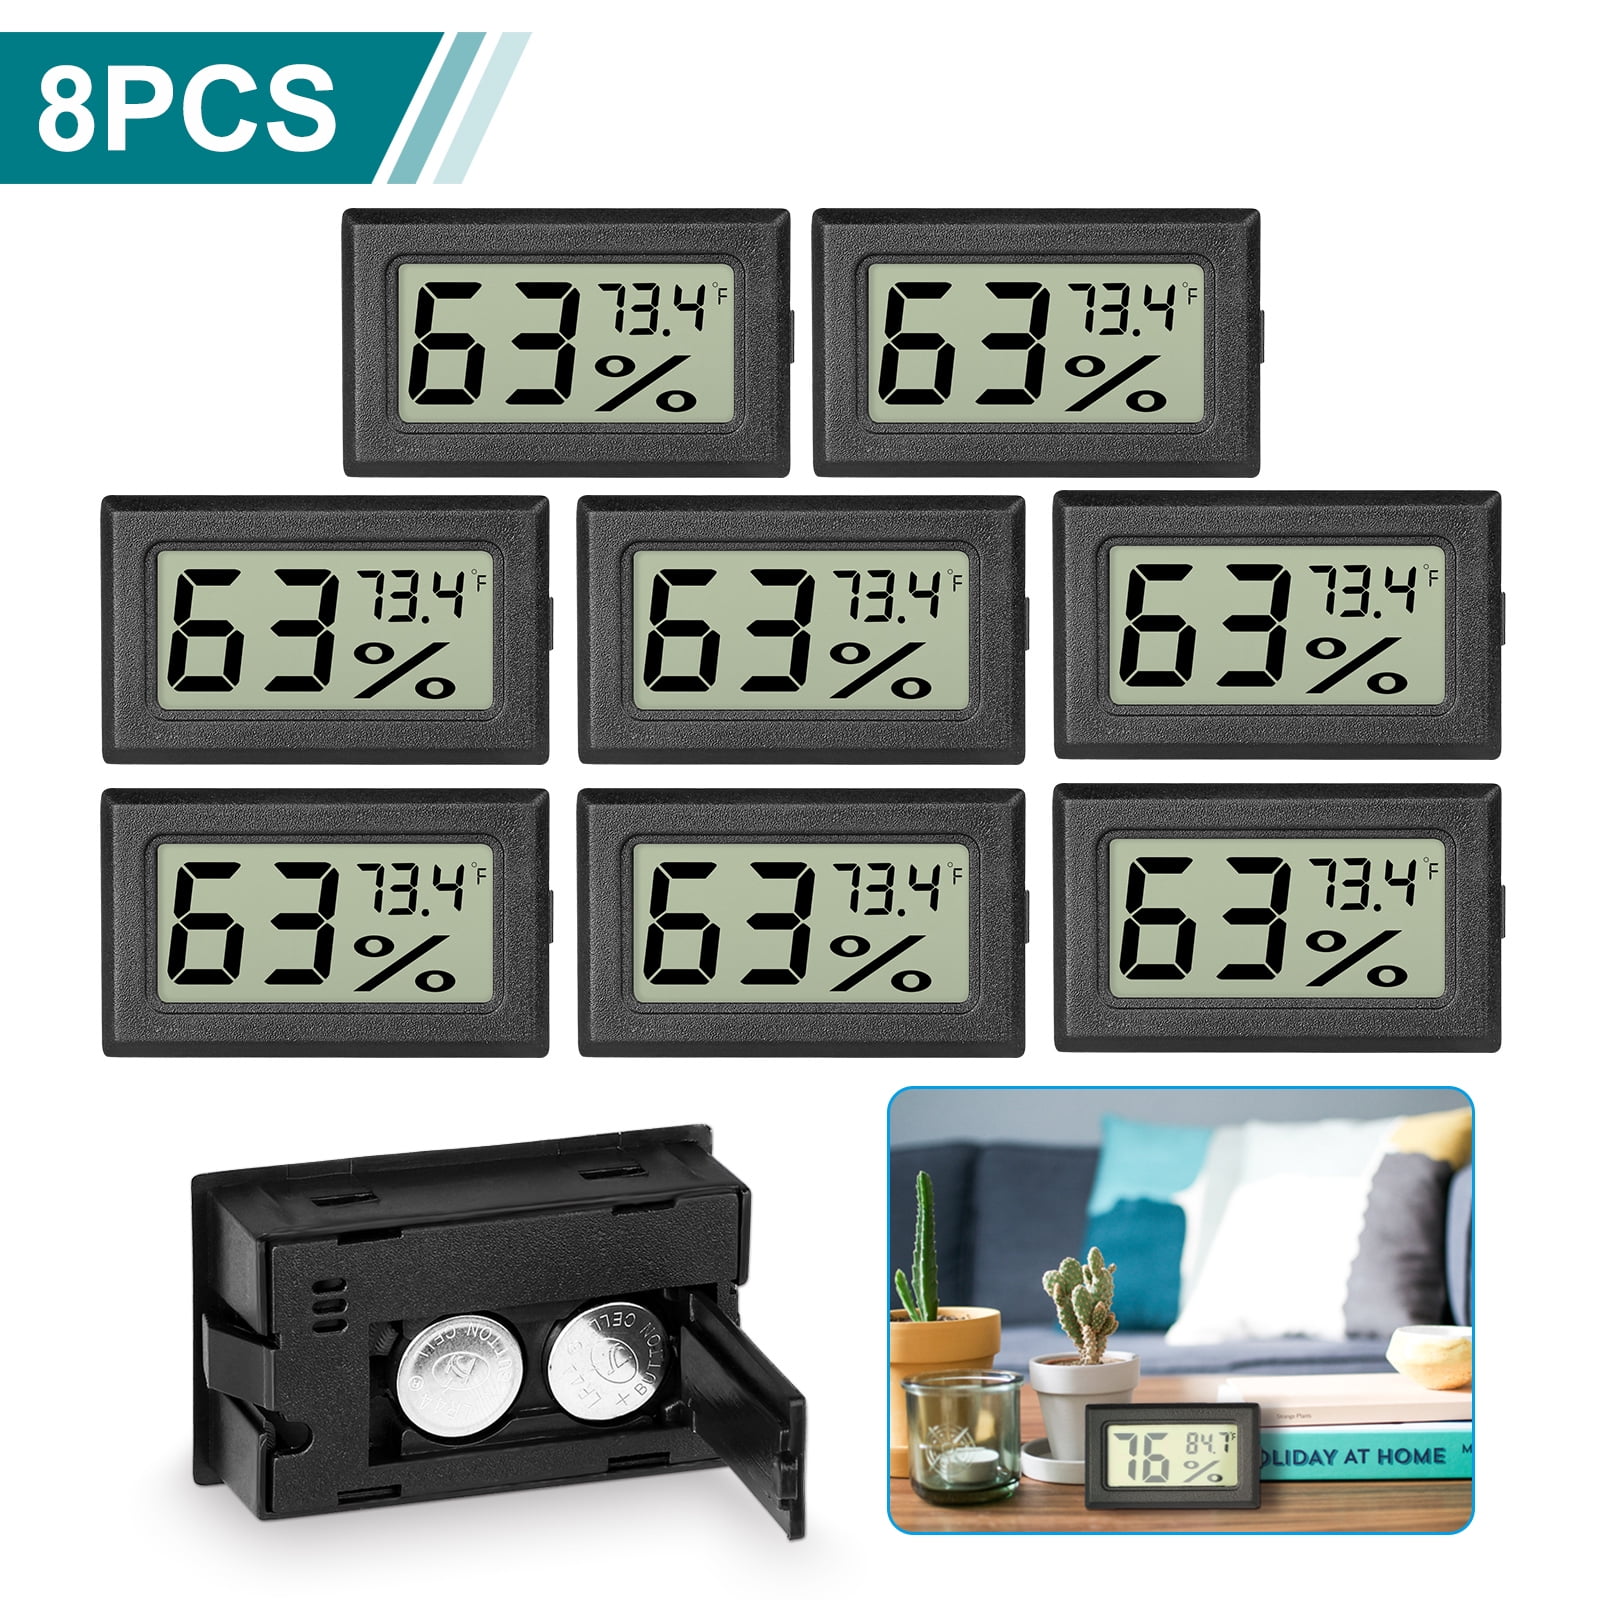 Mini-Digital-LCD-Thermometer-Hygrometer-Humidity-Temperature-Meter-Ind -  USMANTIS